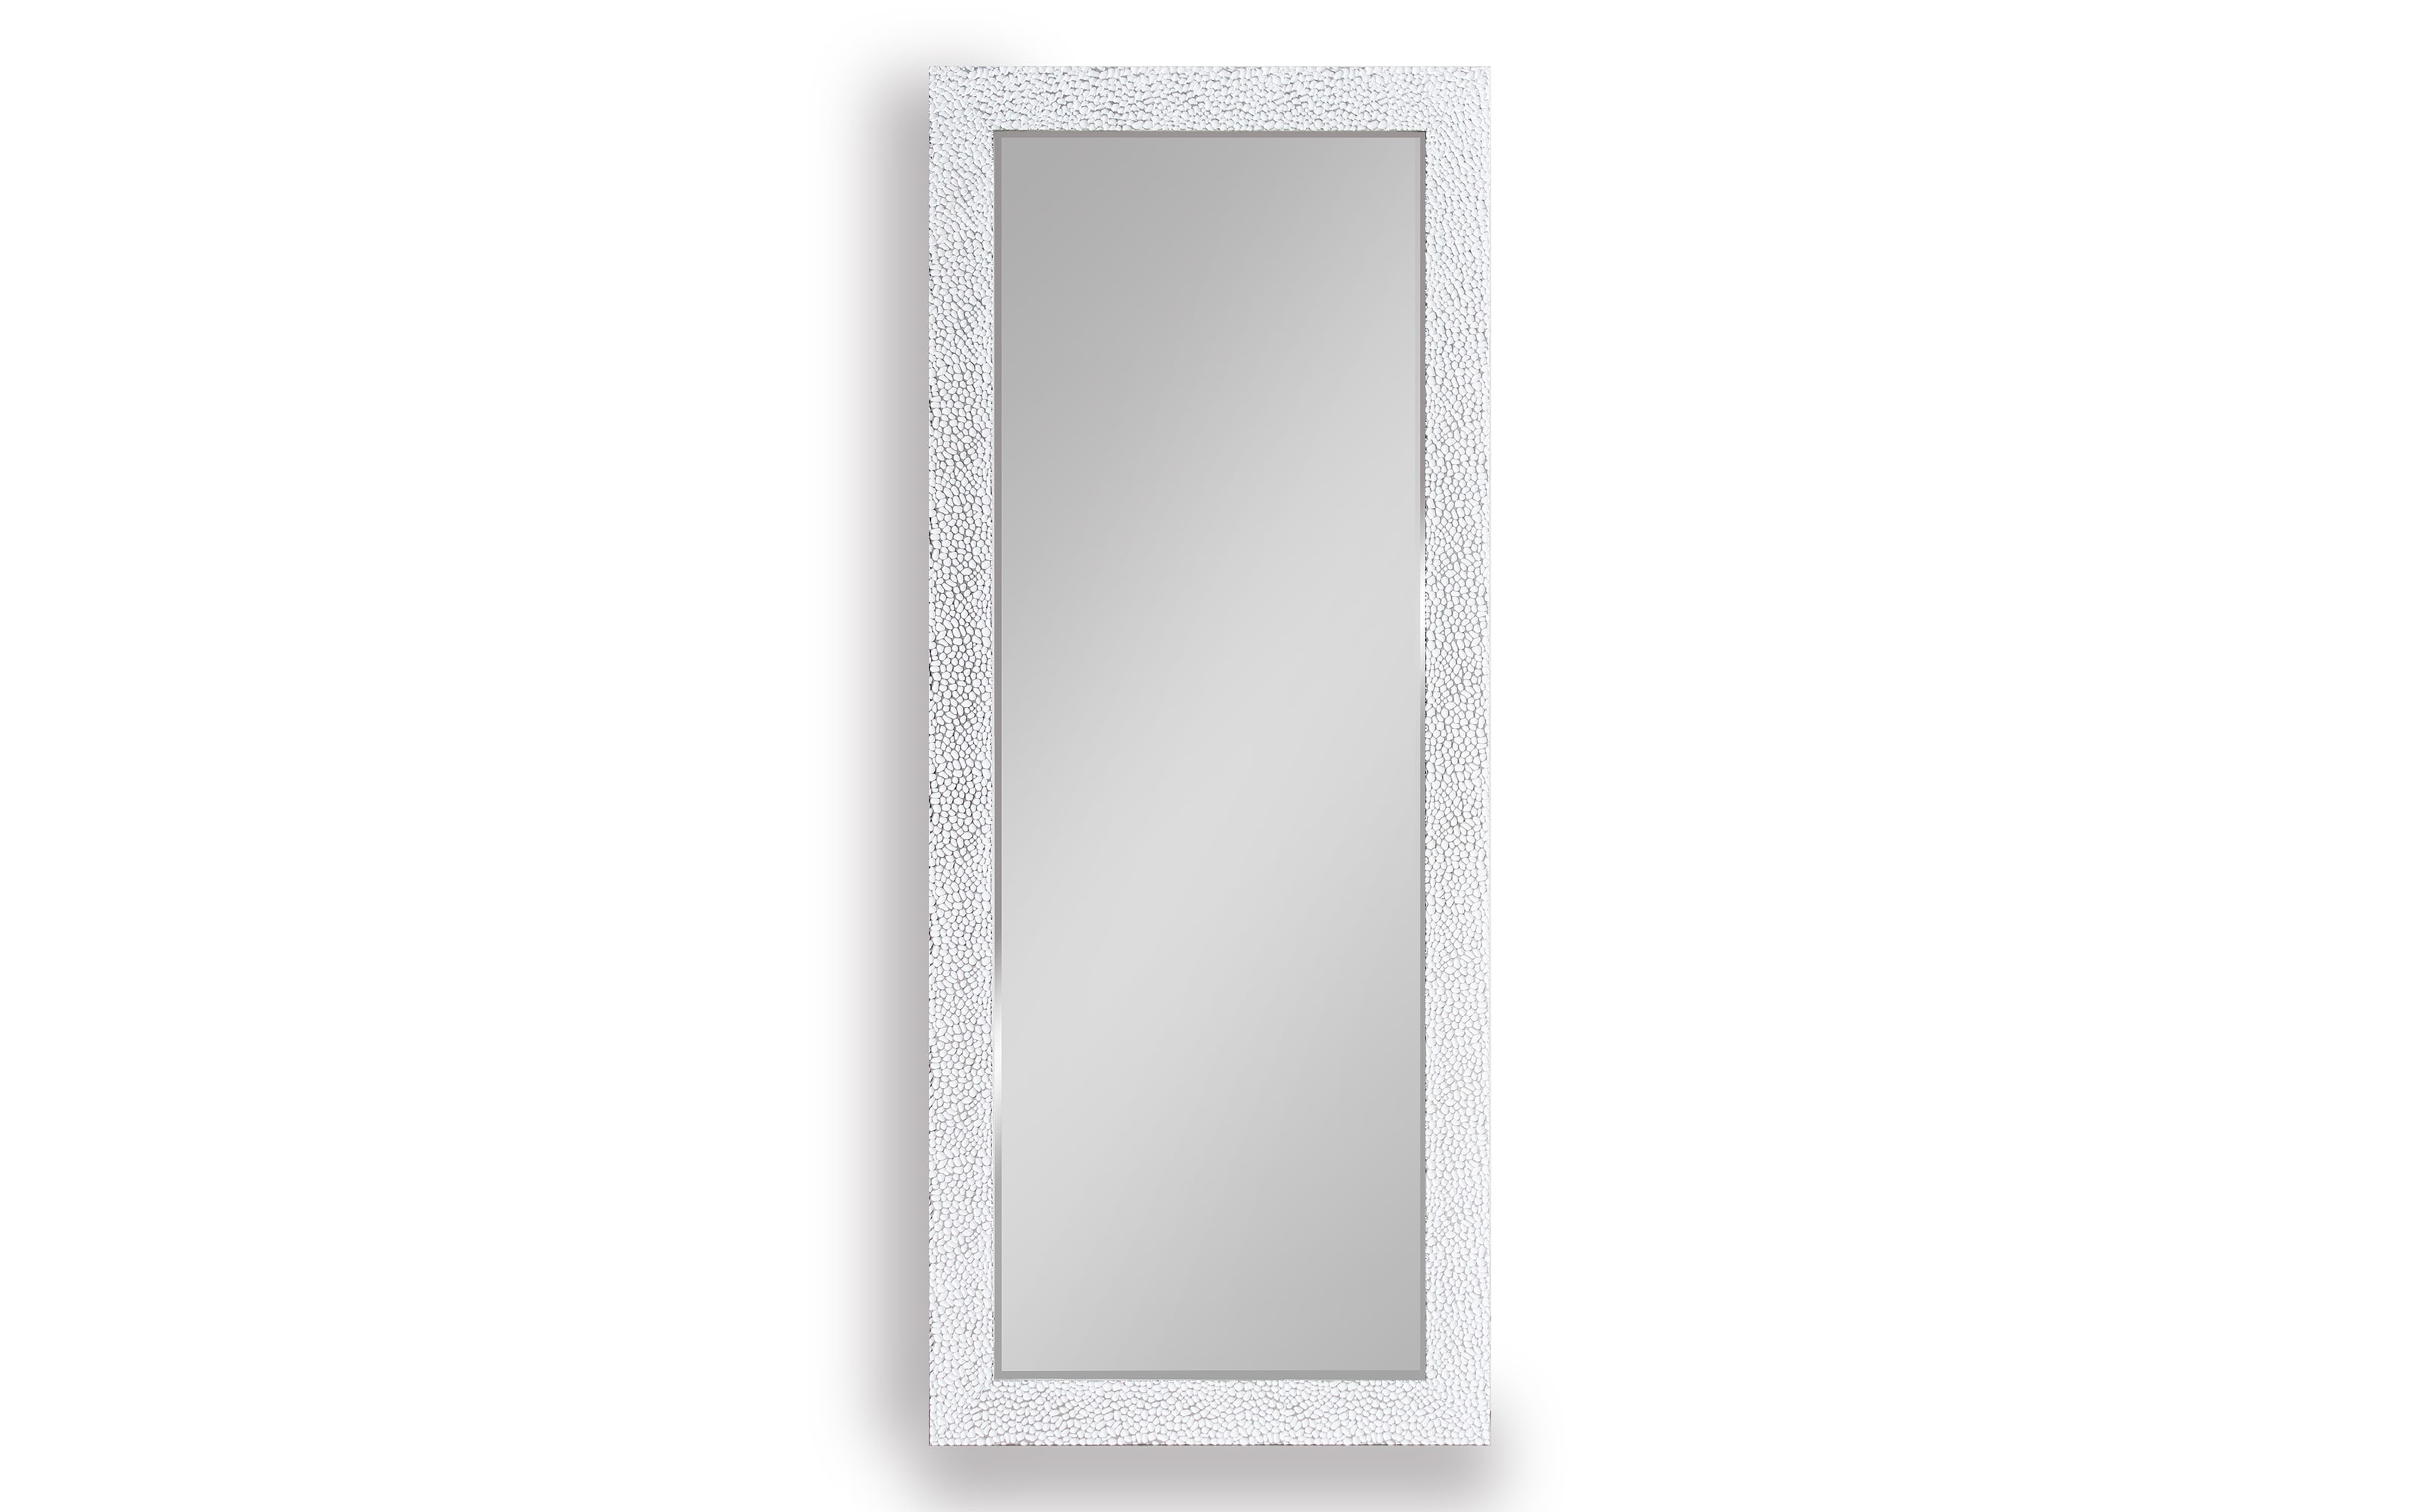 Rahmenspiegel in weiß/chromfarbig, 70 x 170 cm